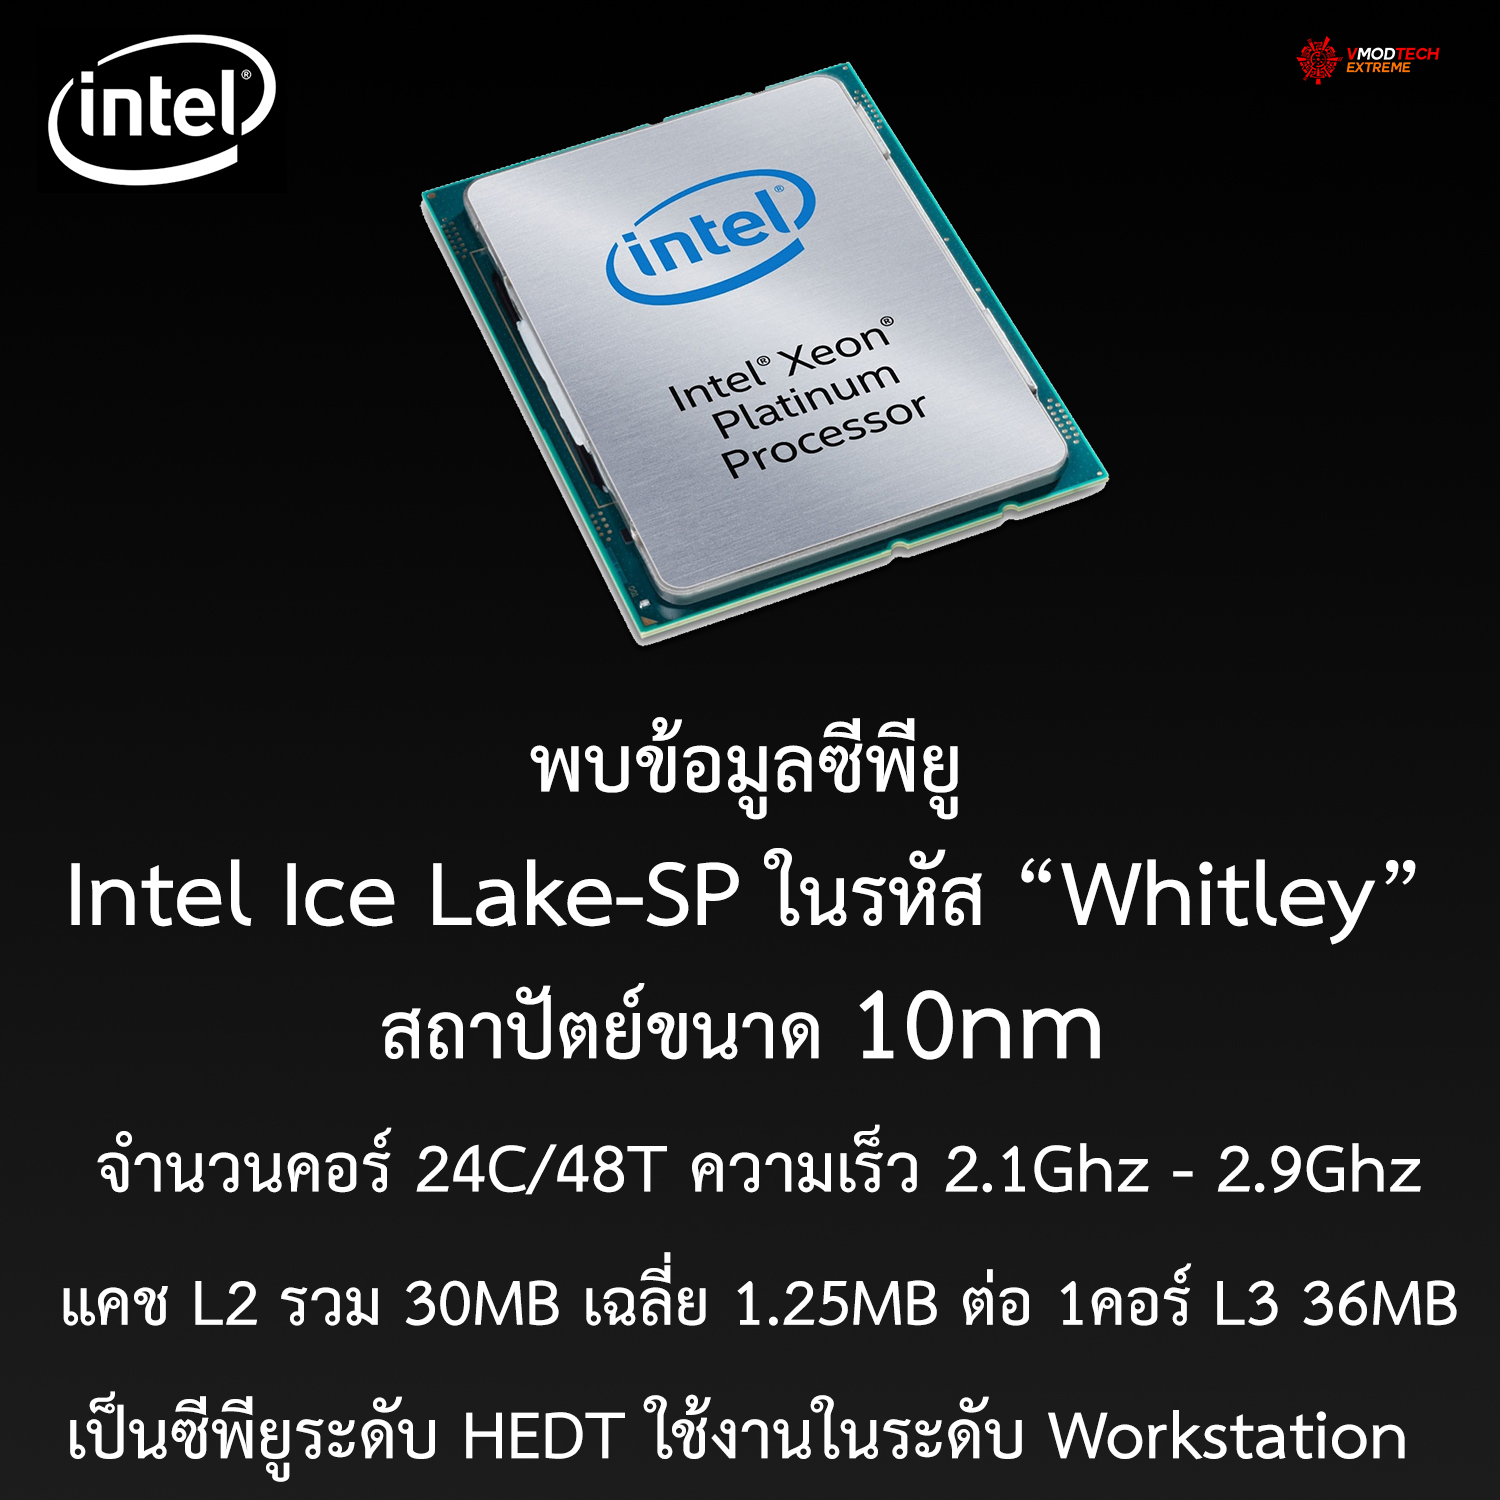 intel ice lake sp 10nm whitley พบข้อมูลซีพียู Intel Ice Lake SP ในรหัส “Whitley” สถาปัตย์ขนาด 10nm มีจำนวนคอร์มากถึง 24C/48T กันเลยทีเดียว 